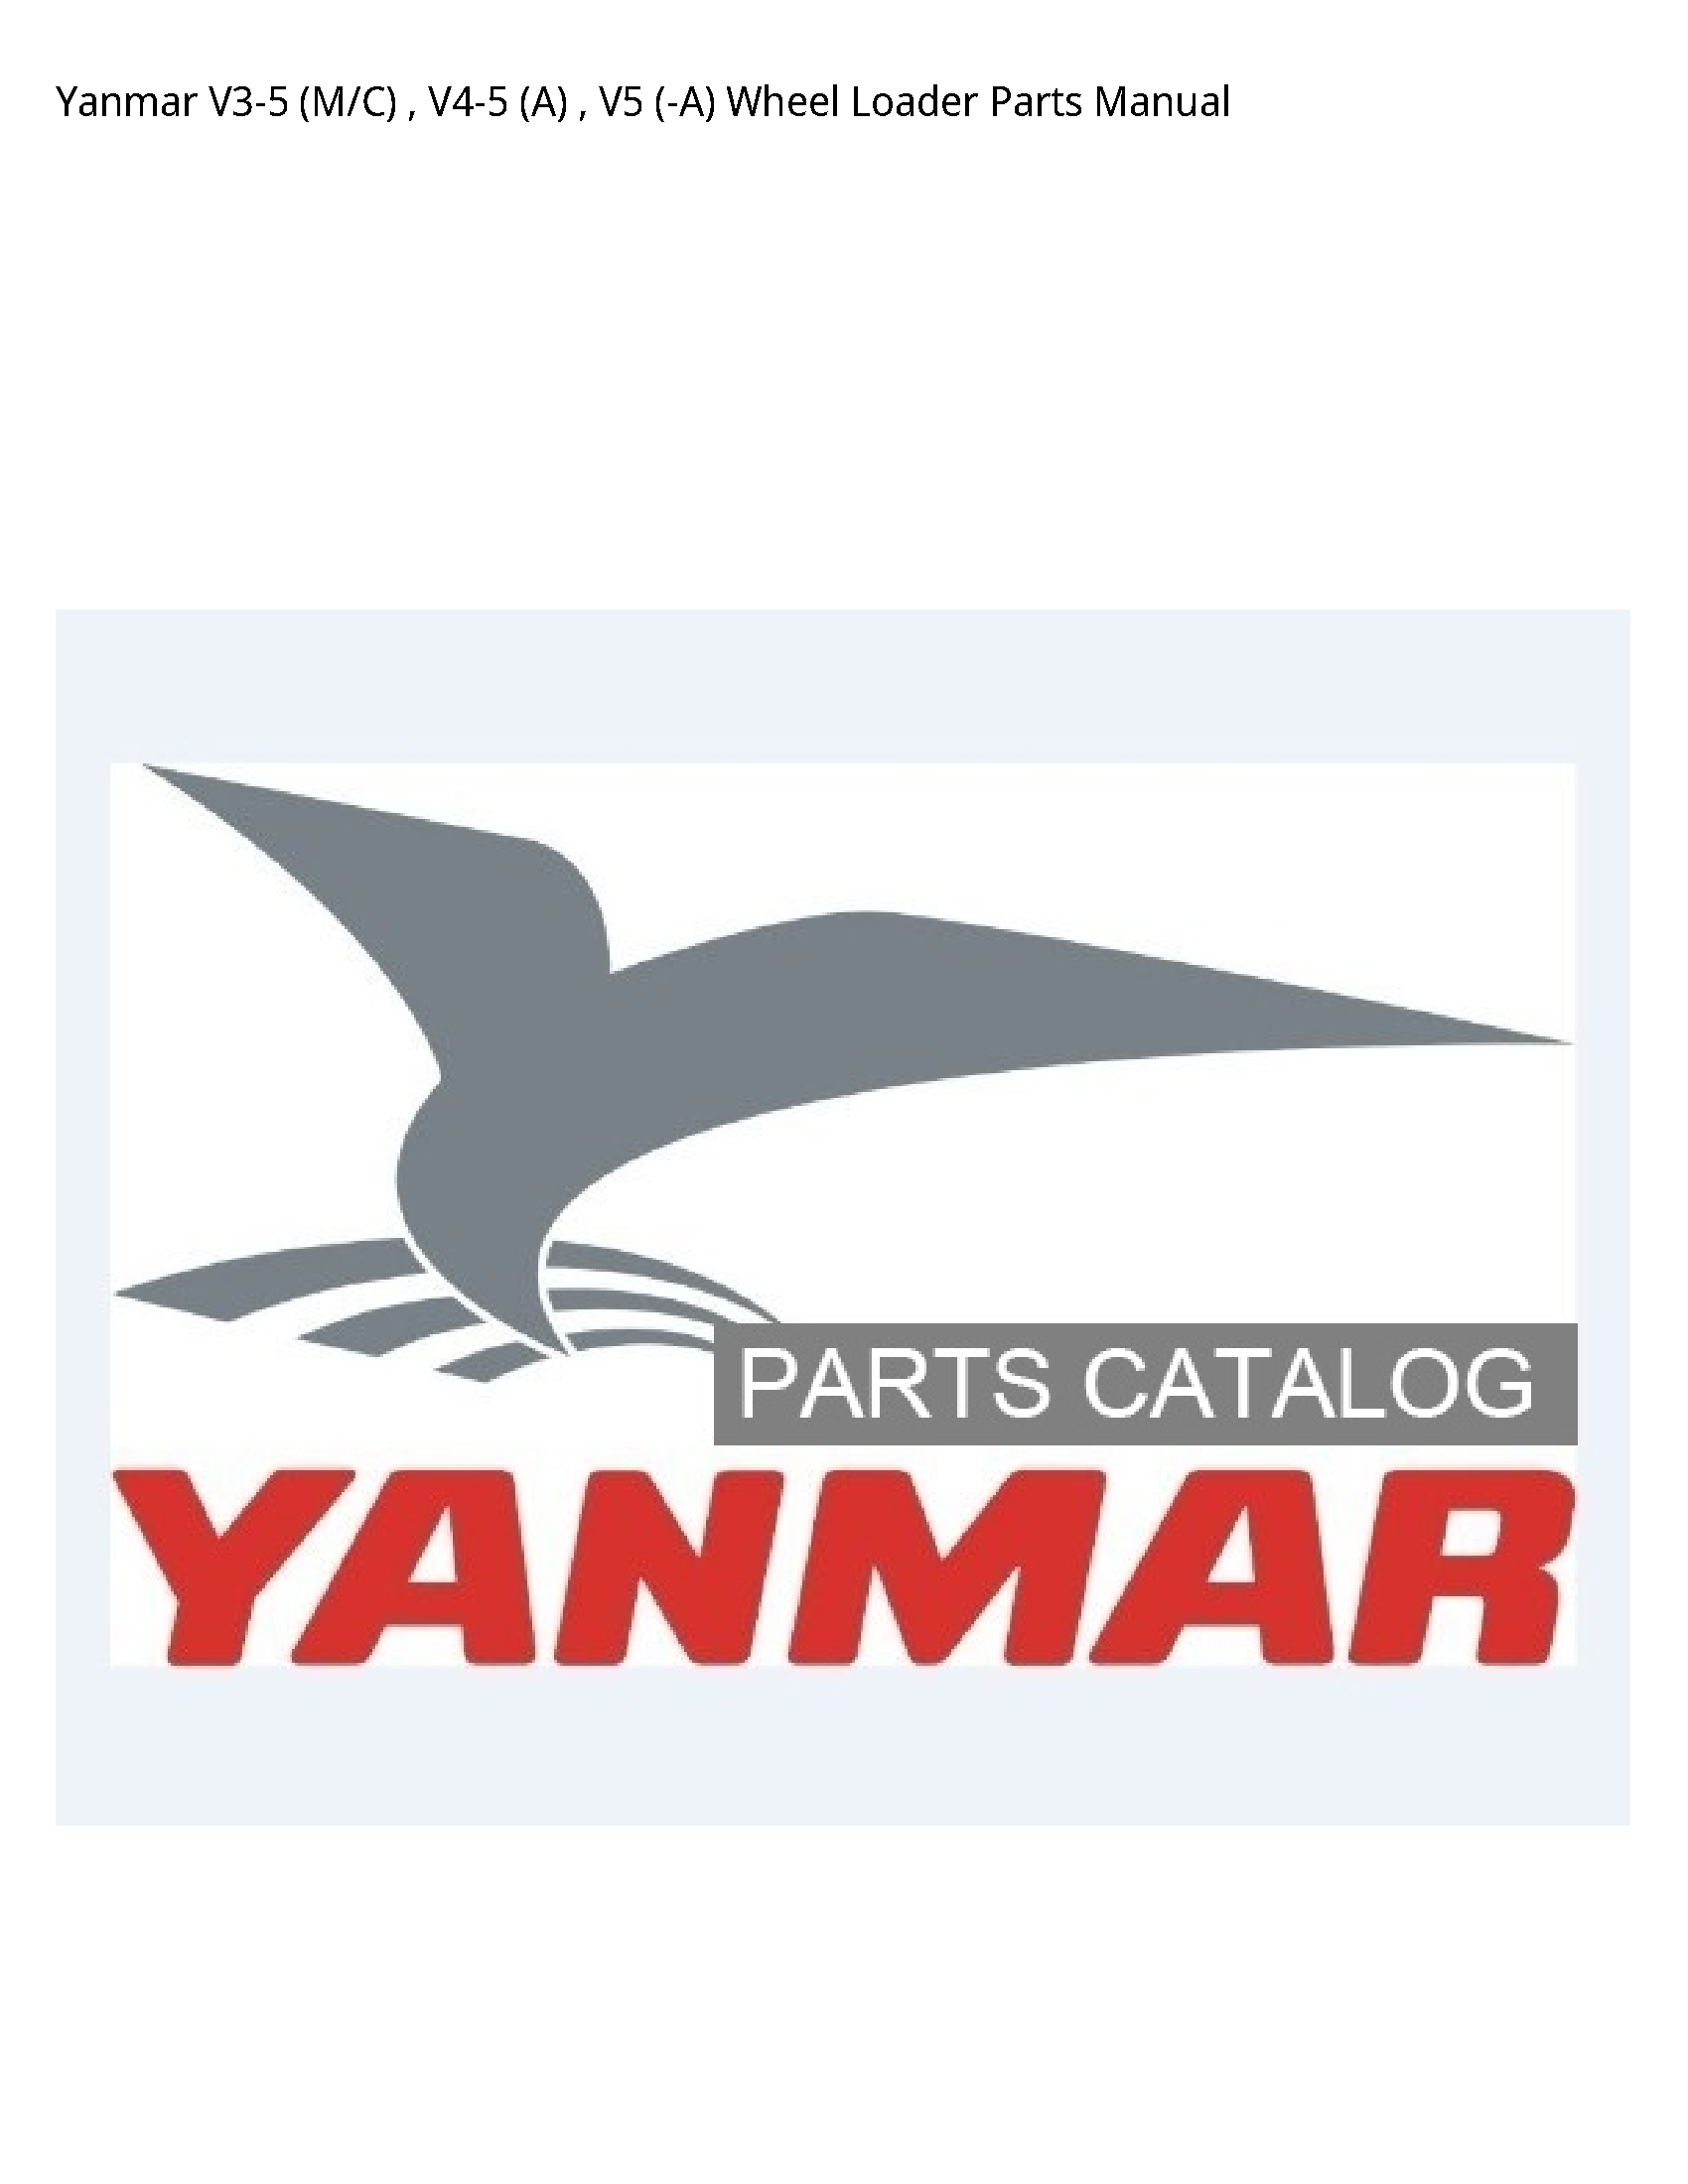 Yanmar V3-5 (M/C) (A) (-A) Wheel Loader Parts manual